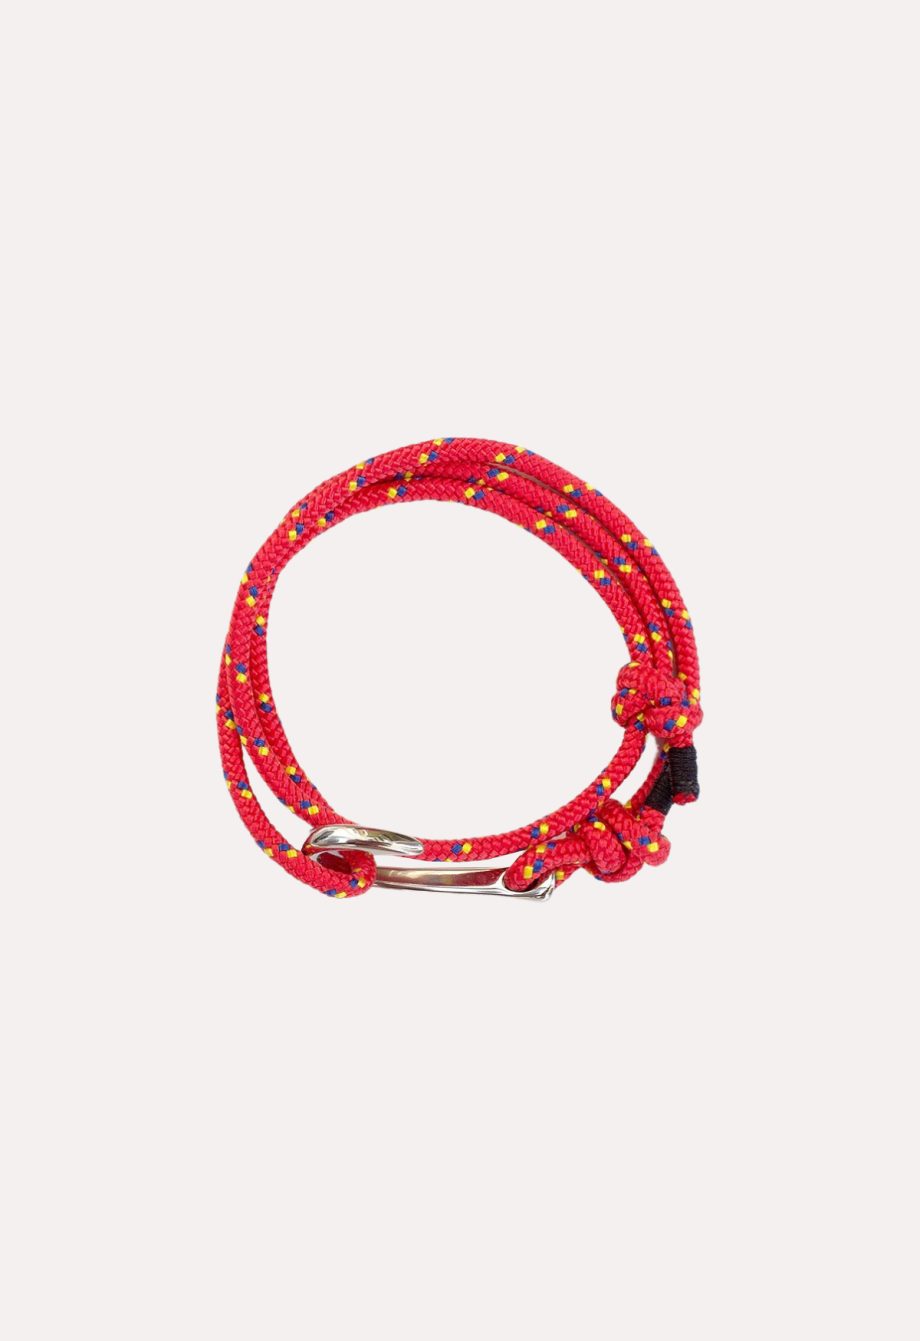 Stainless steel hook and navy rope man bracelet